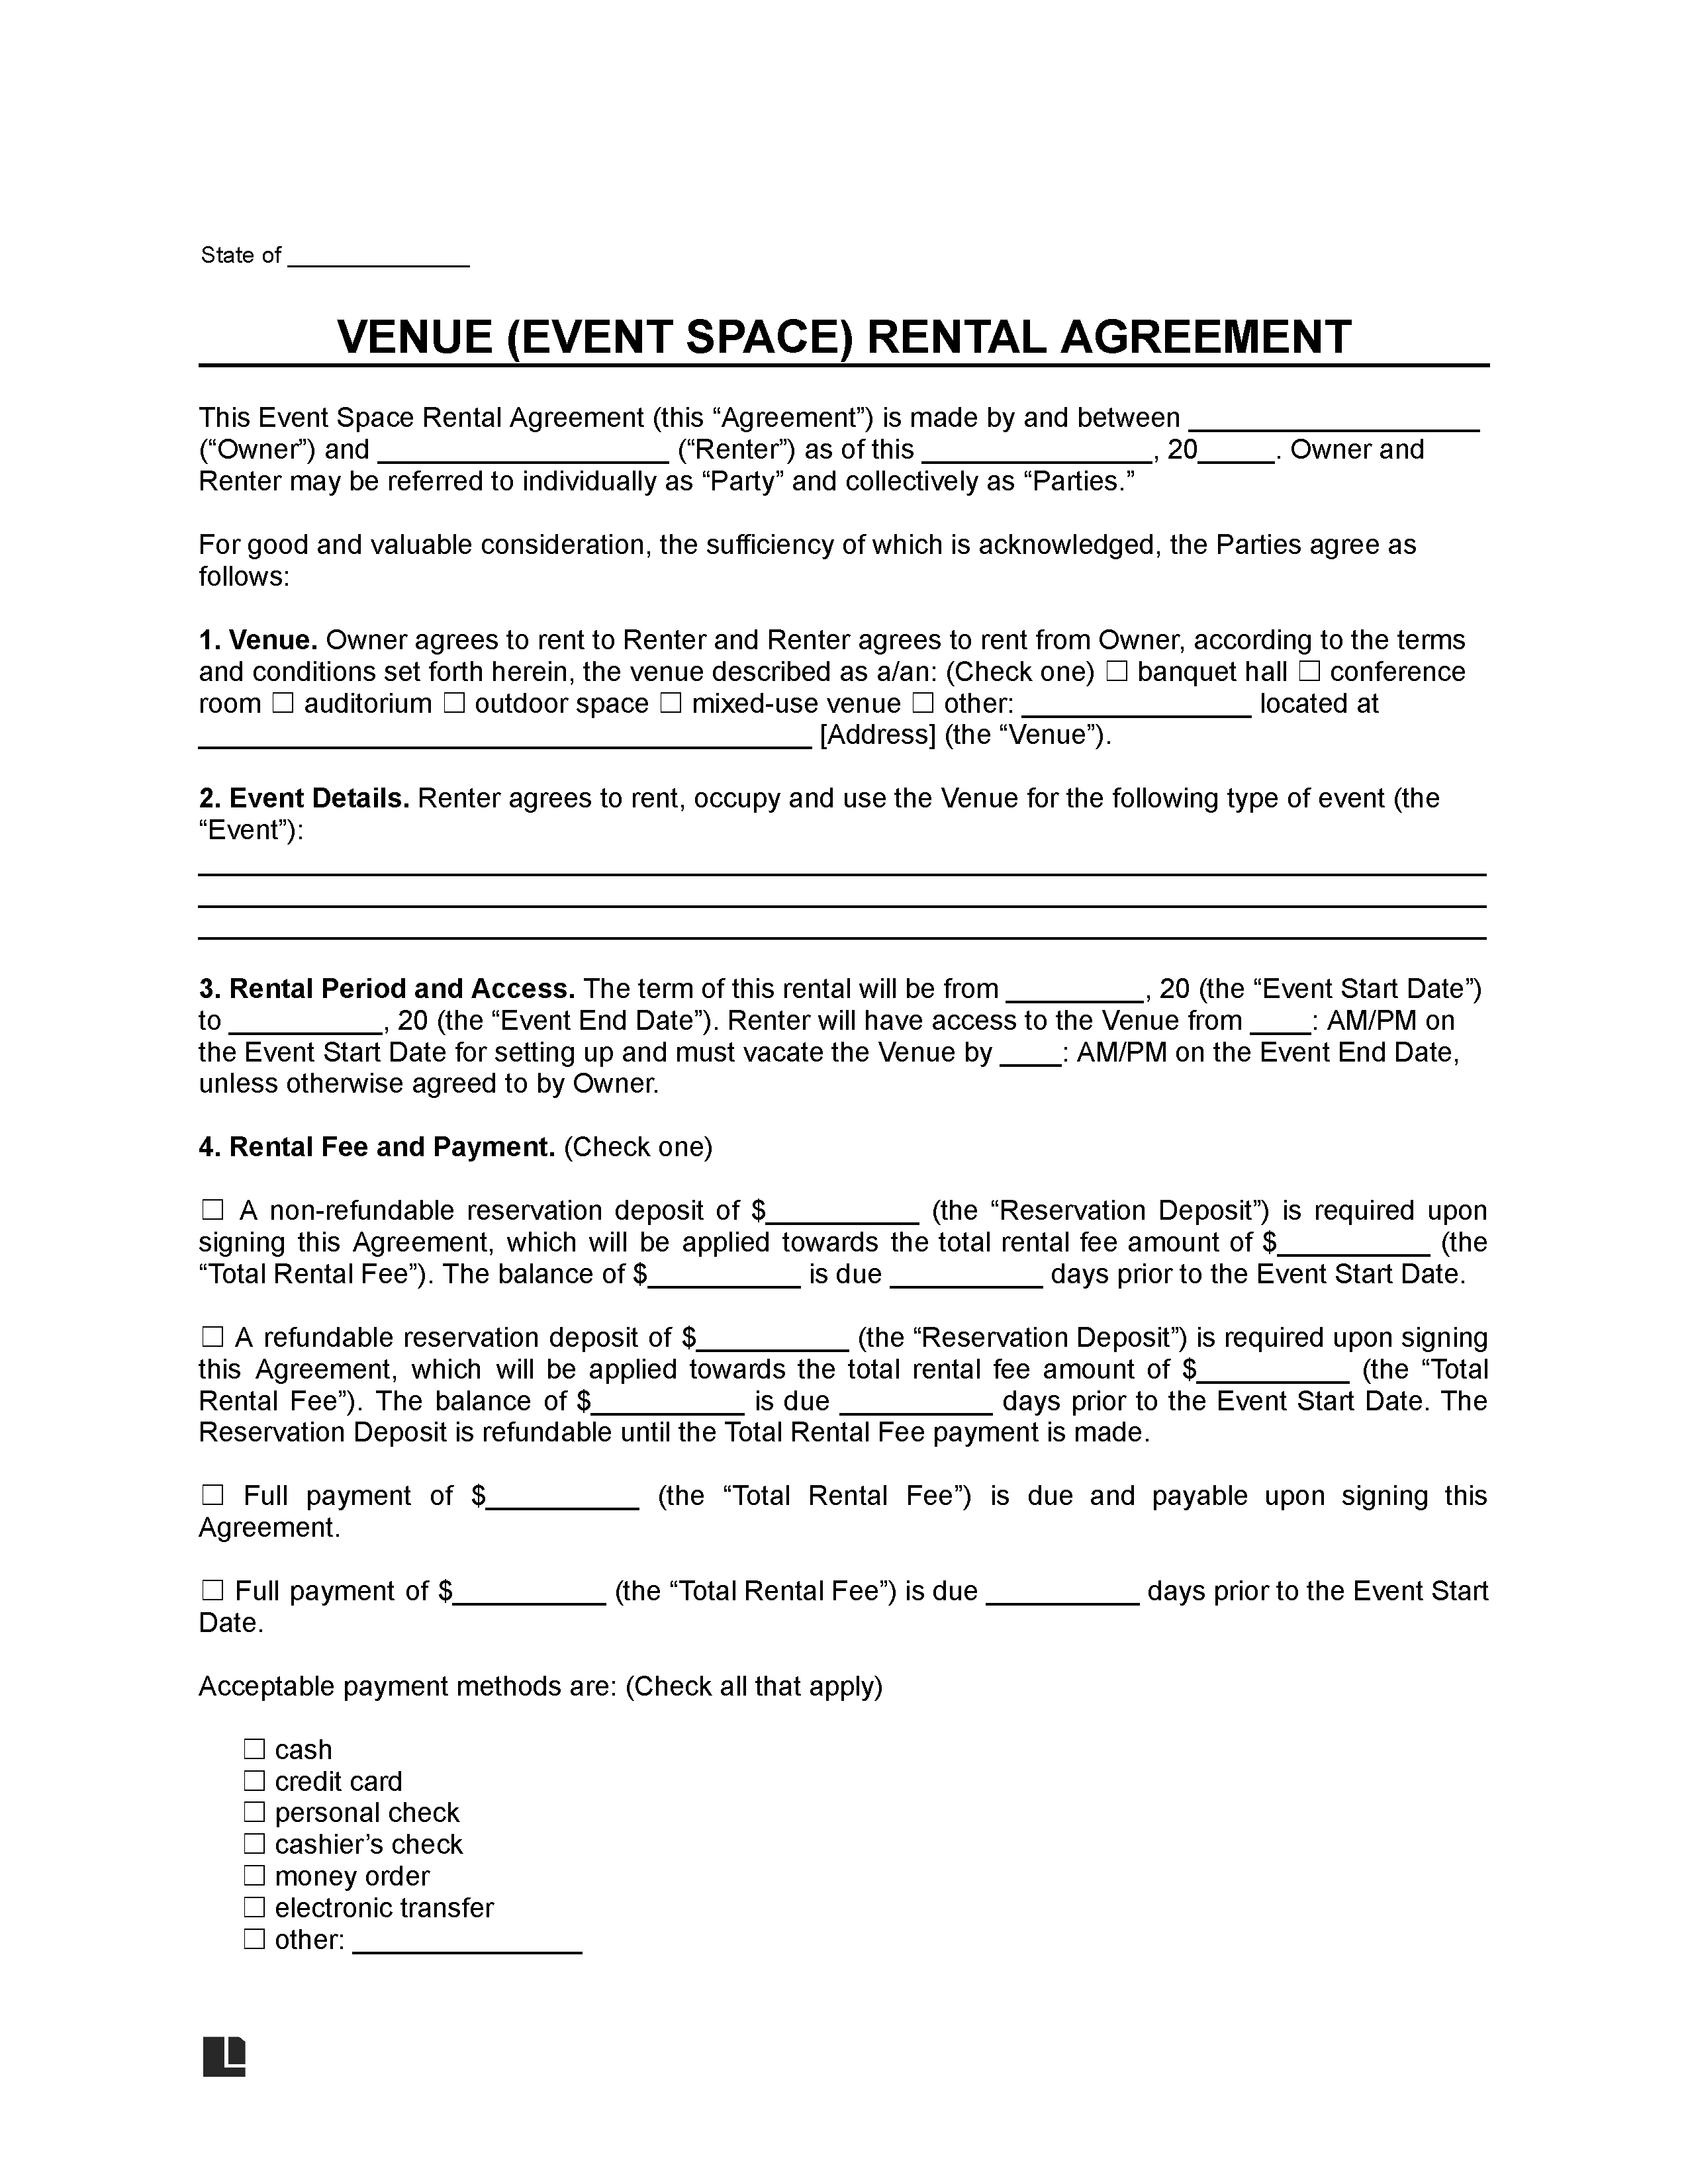 Venue Event Space Rental Agreement